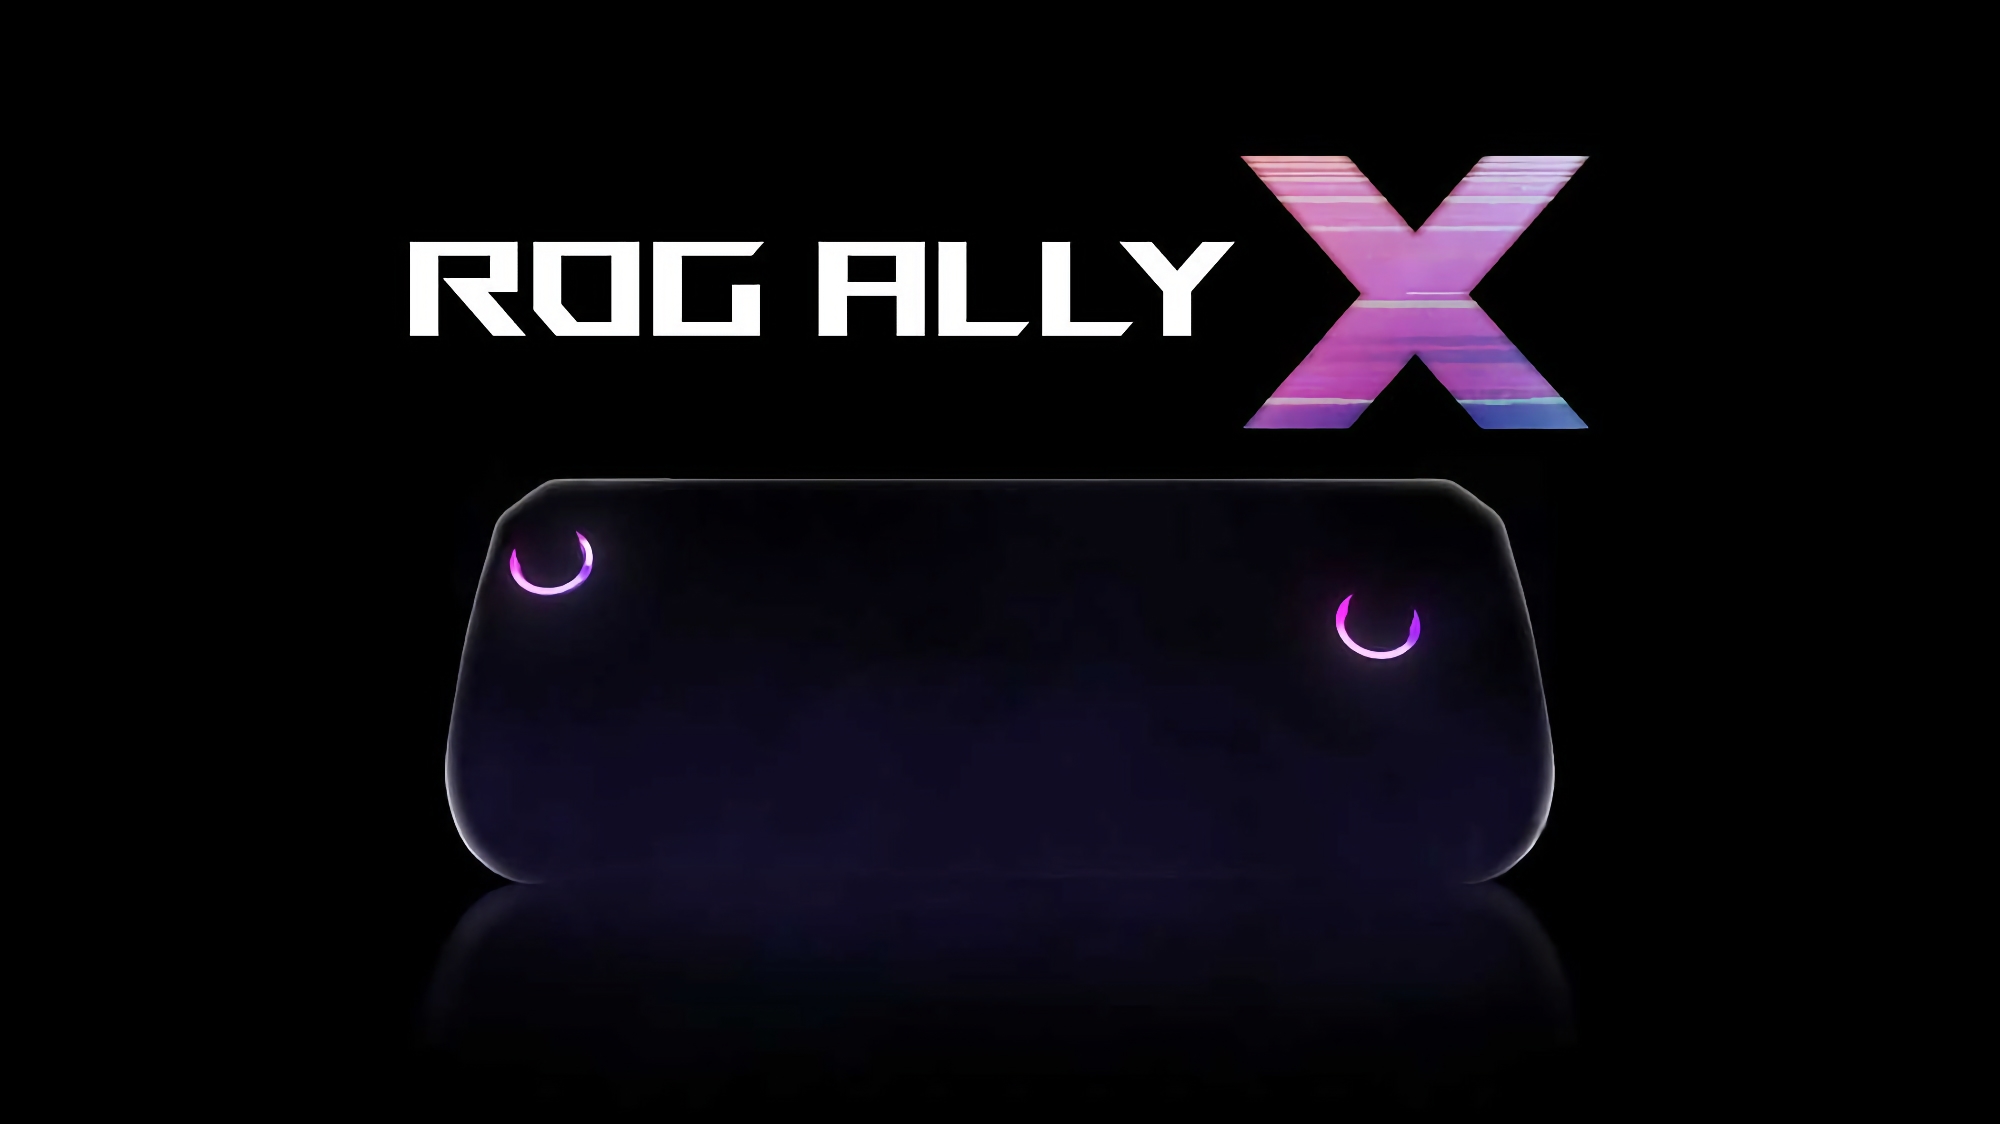 ASUS viser frem ROG Ally X-spillkonsollen på Computex 2024 den 2. juni